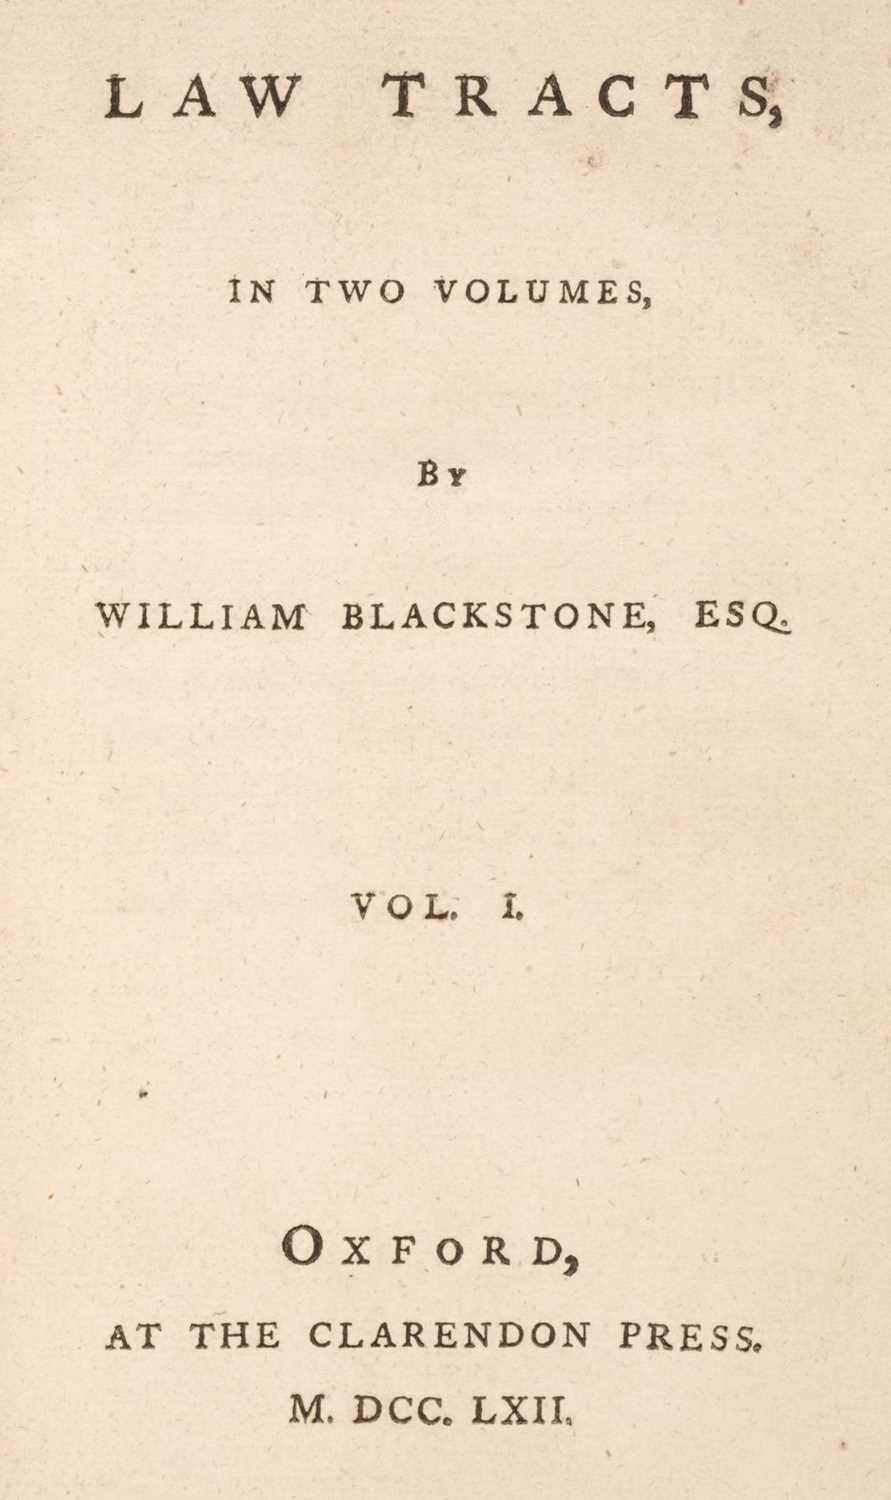 Lot 206 - Blackstone (William). Law Tracts, 2 volumes, 1st edition, Oxford: Clarendon Press, 1762